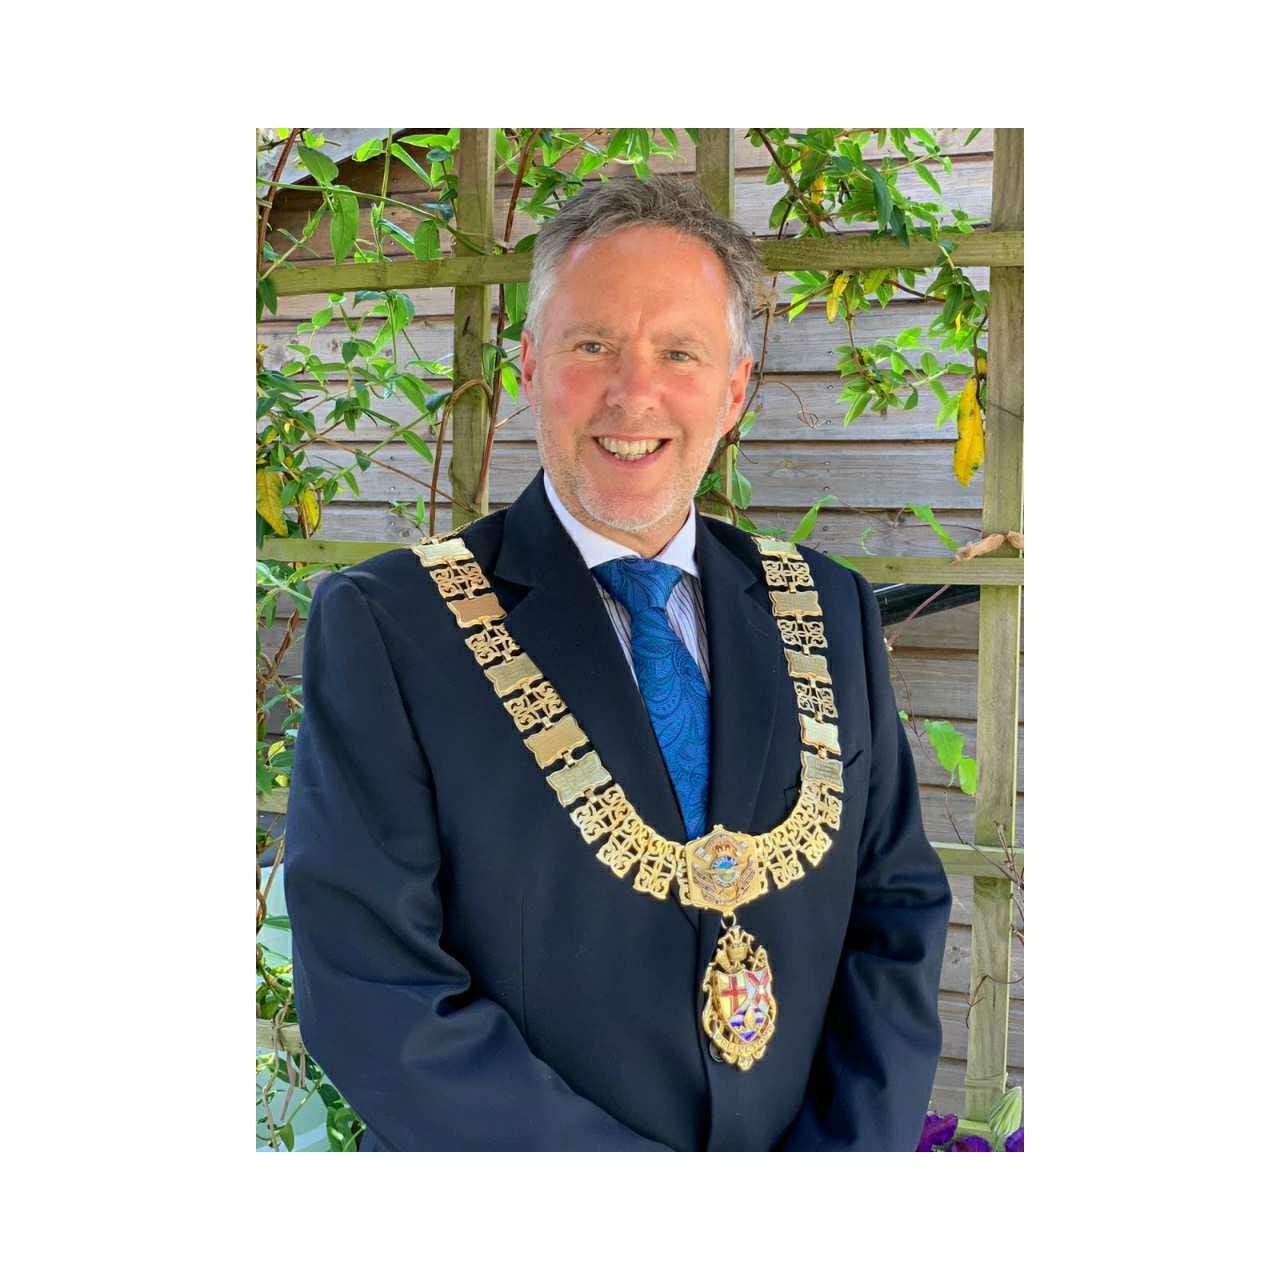 PRESS RELEASE: Mayor of Felixstowe - Cllr Mark Jepson